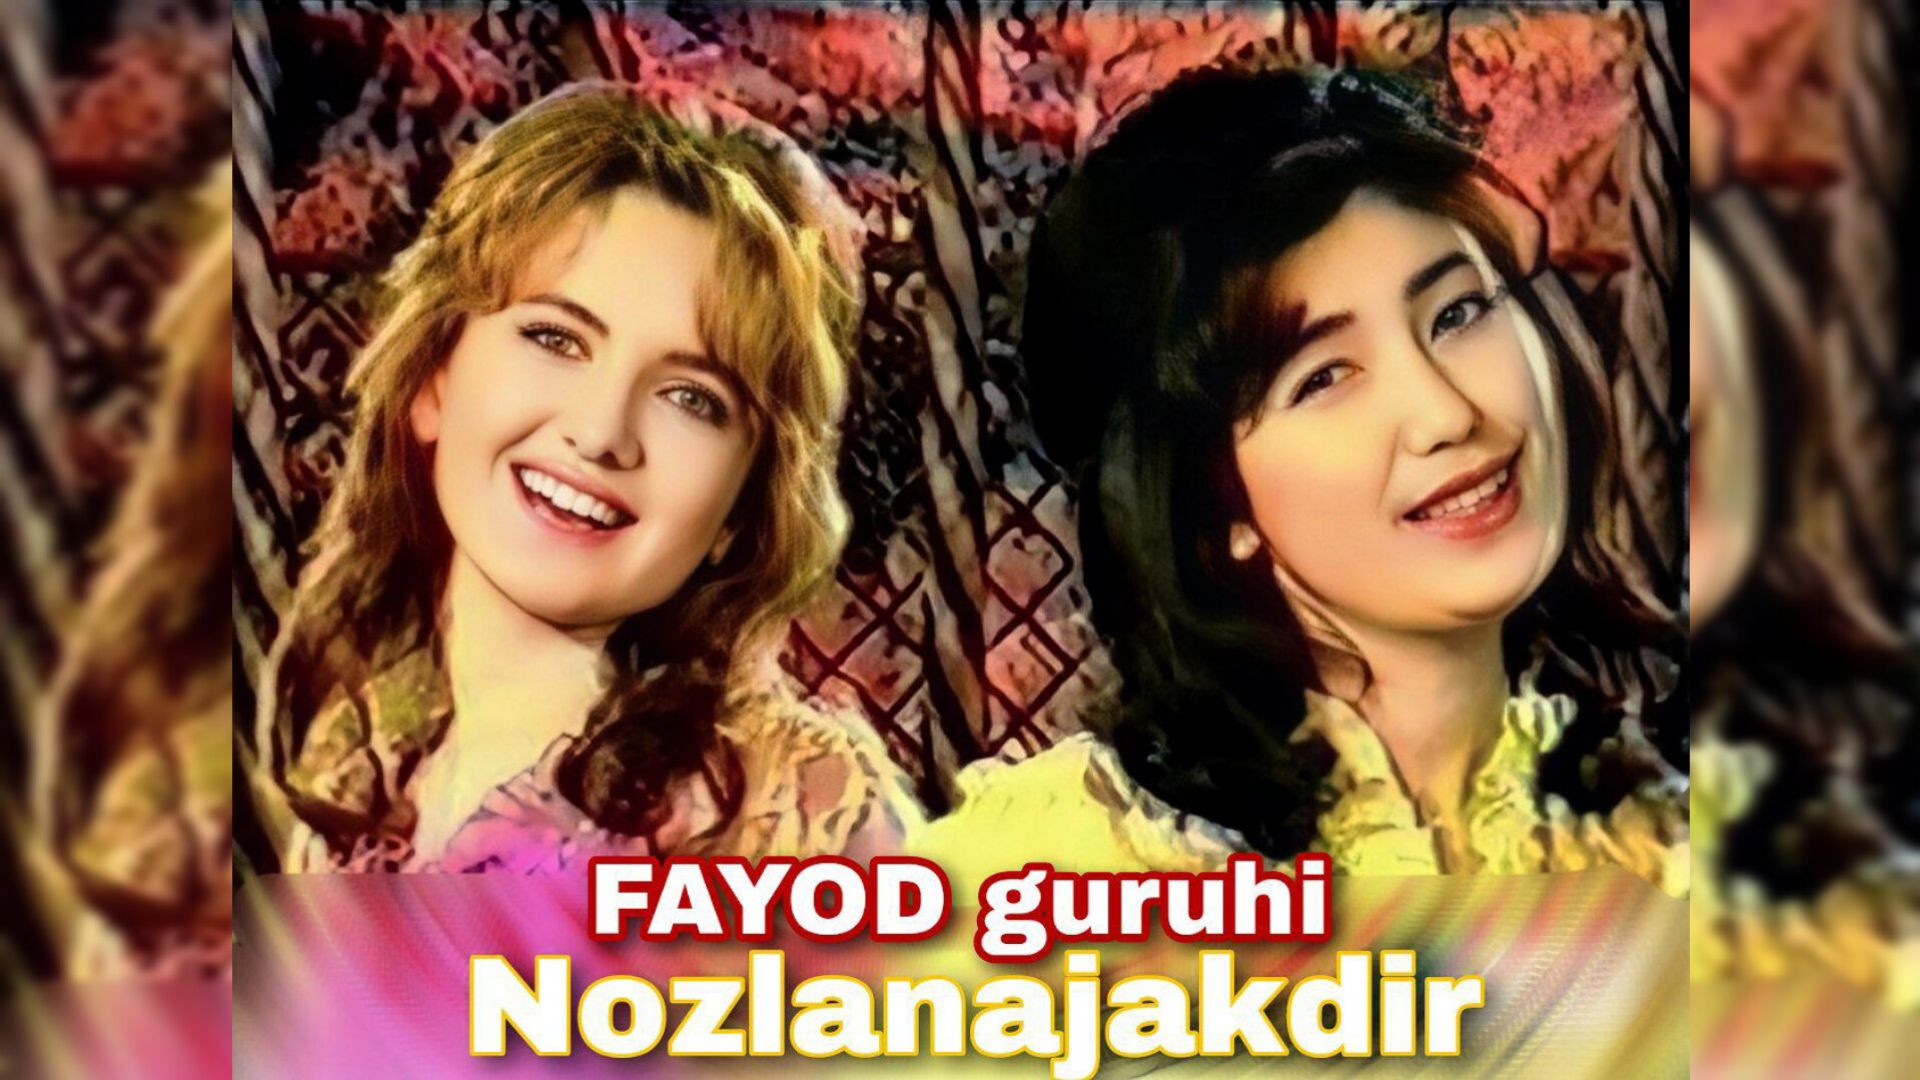 Fayod guruhi - Nozlanajakdir (1999)